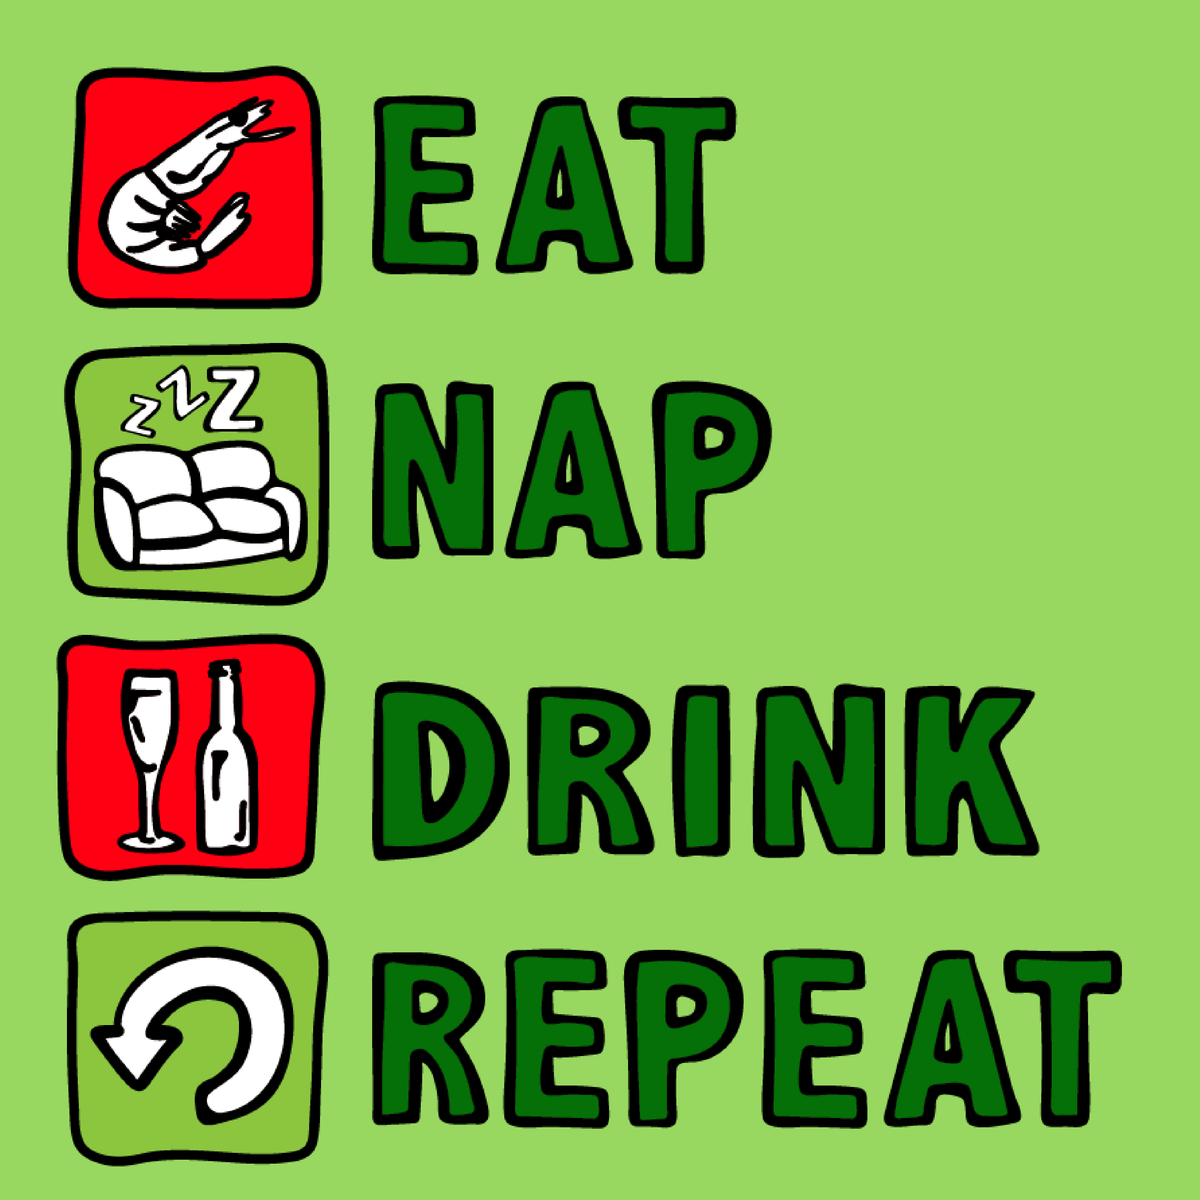 Eat Nap Drink Repeat 🦐💤 – Tank